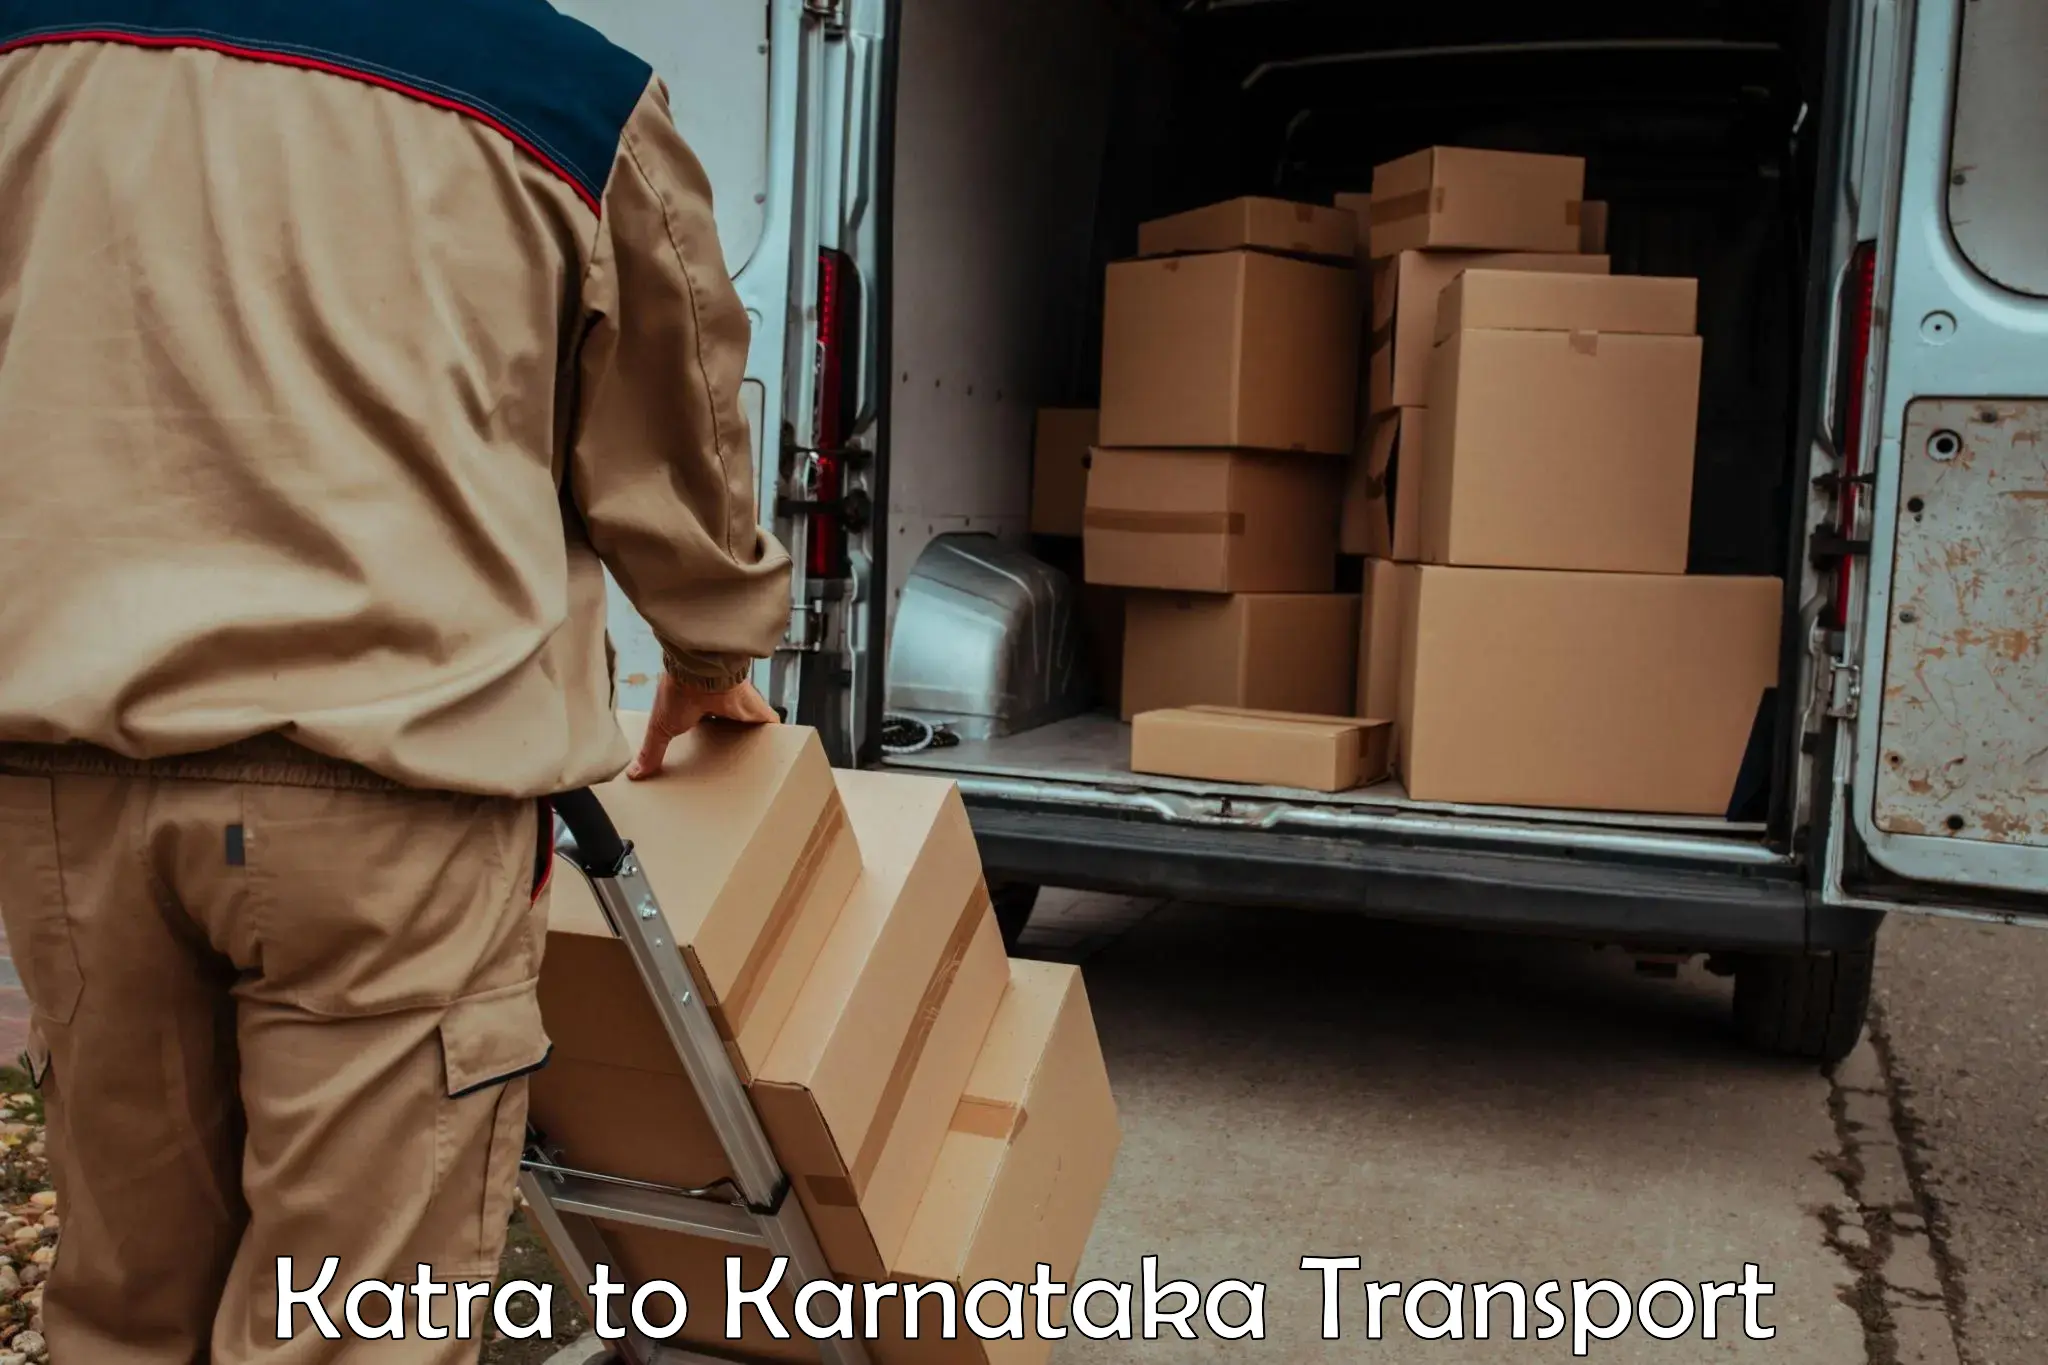 Sending bike to another city Katra to Karnataka